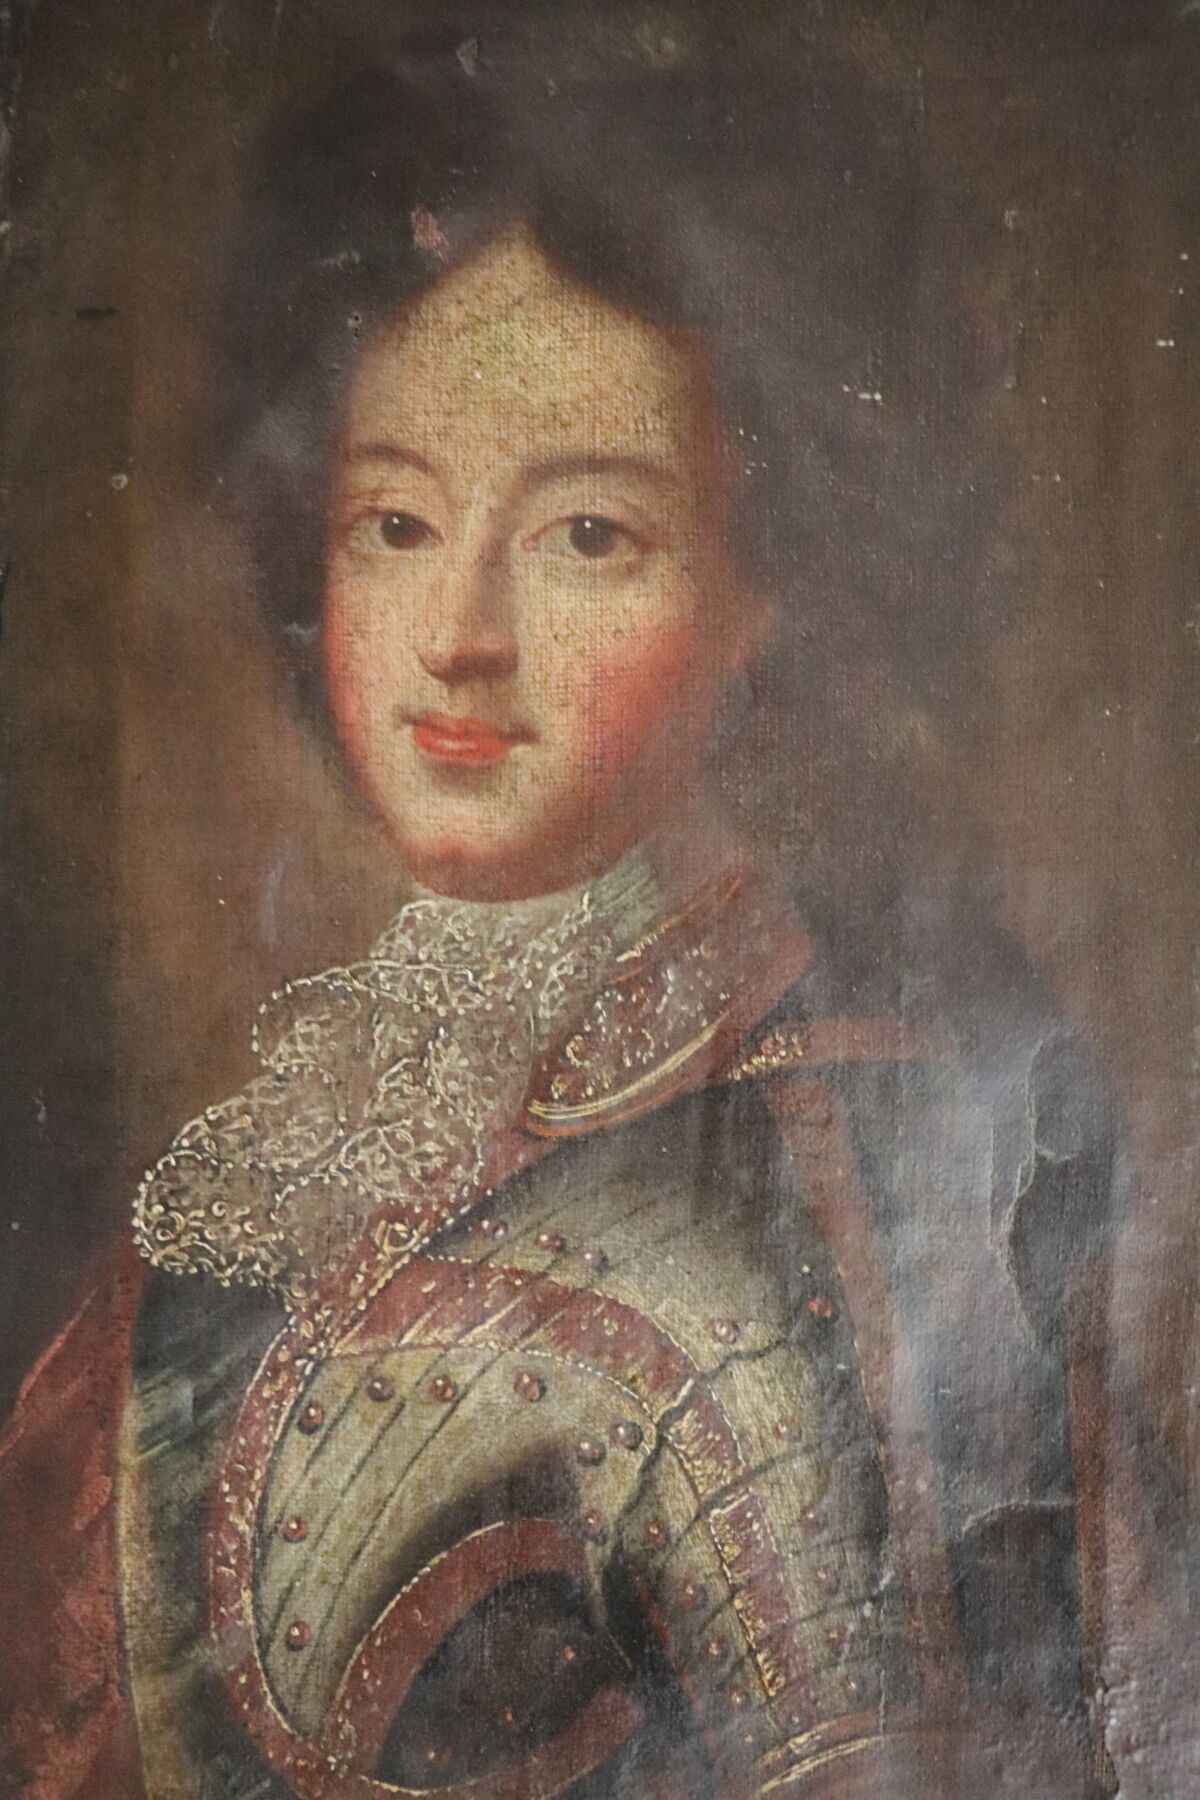 Null 十八世纪初的法国画派。 
路易十五的肖像。
布面油画。
高_39,1厘米L_24,8厘米，上部有小块缺损。